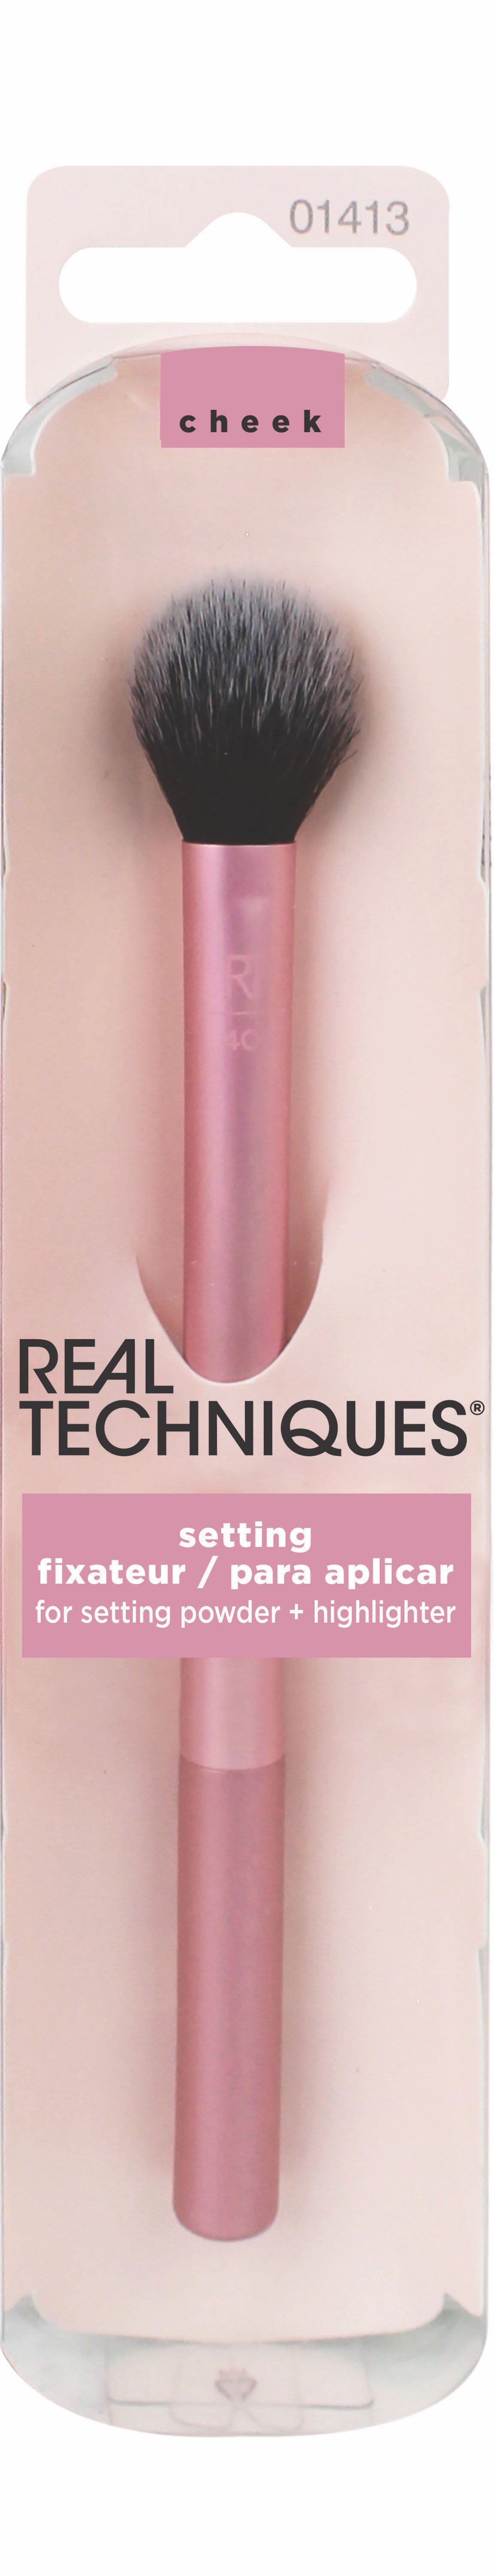 Real Techniques Setting Brush